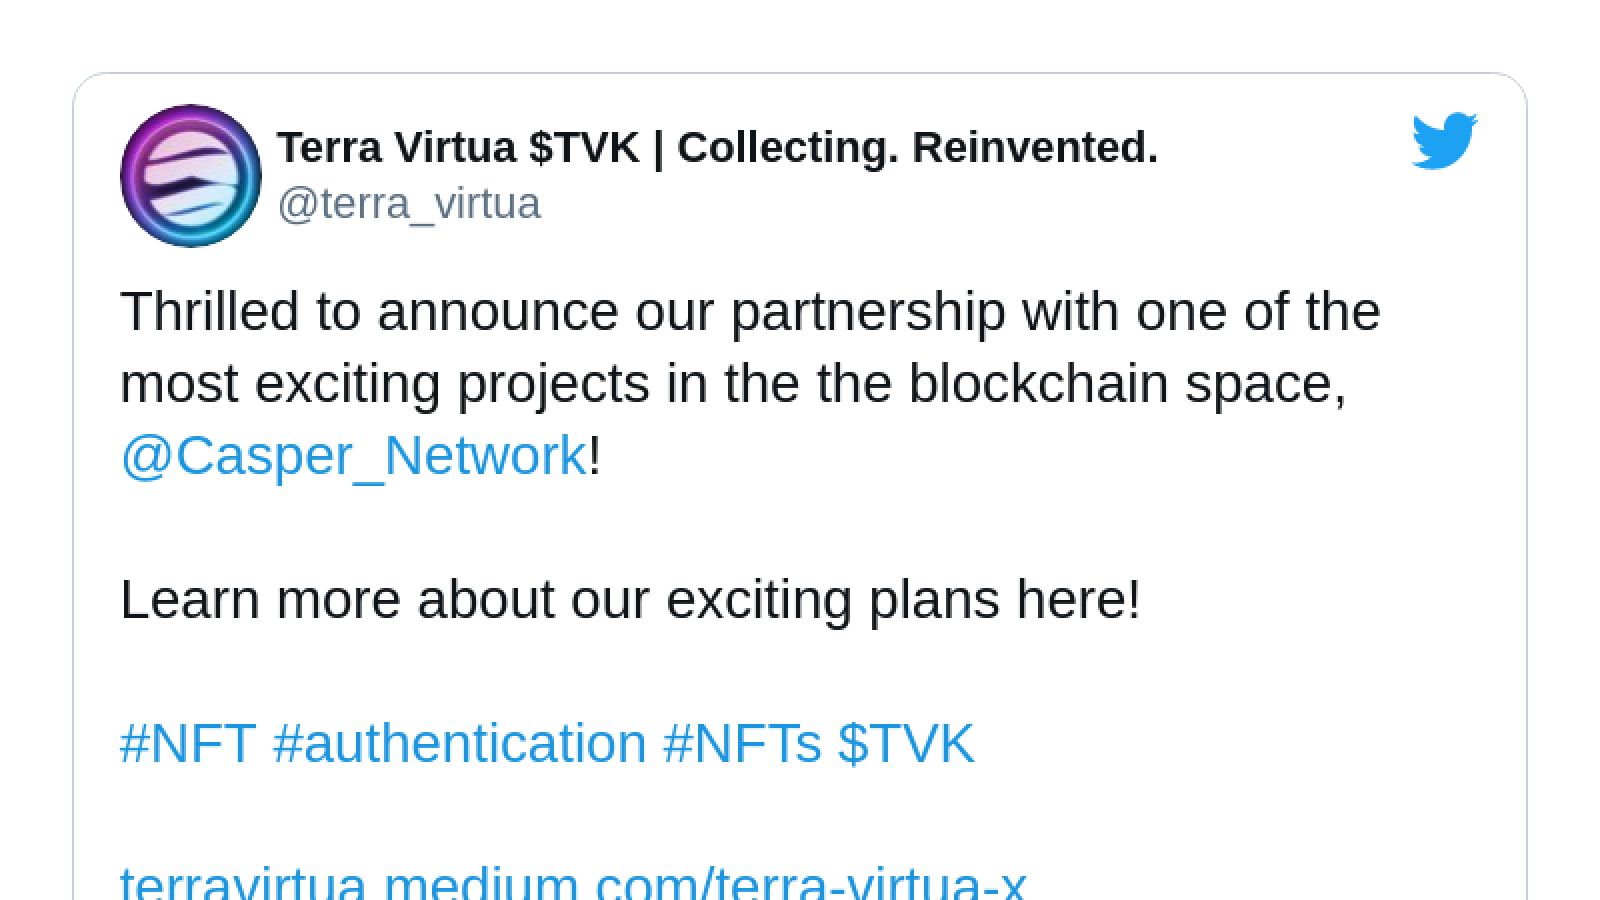 Terra Virtua partners Casper Network